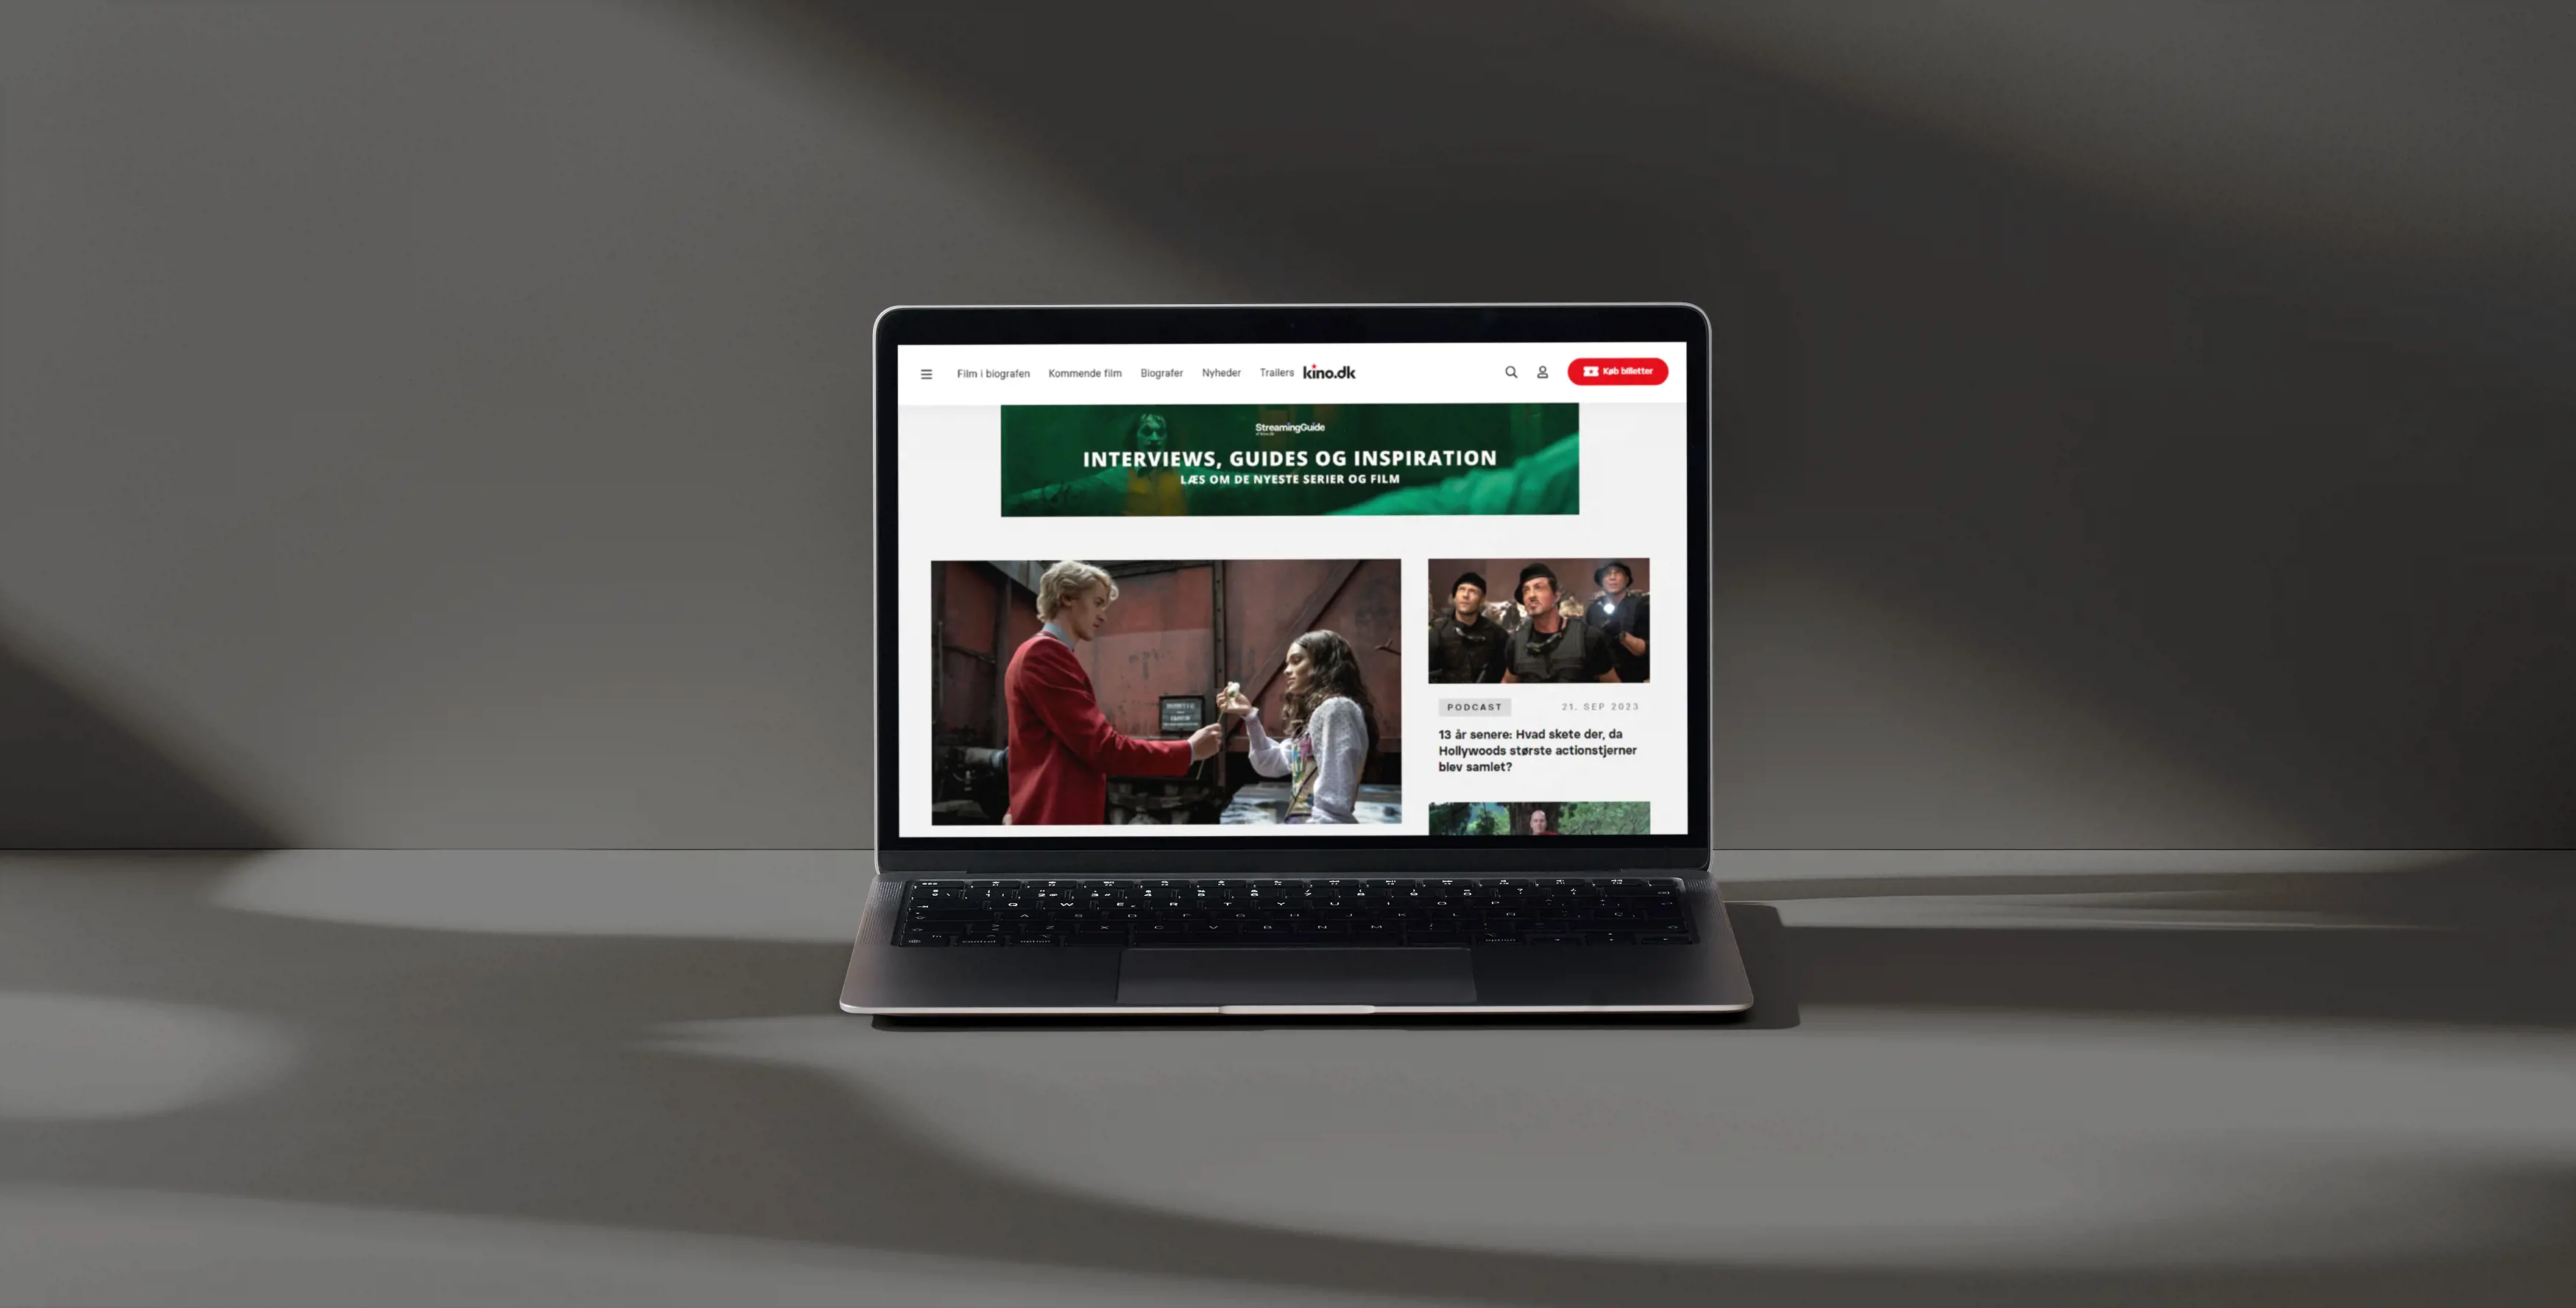 Kino.dk's new website. Showcased on a laptop 